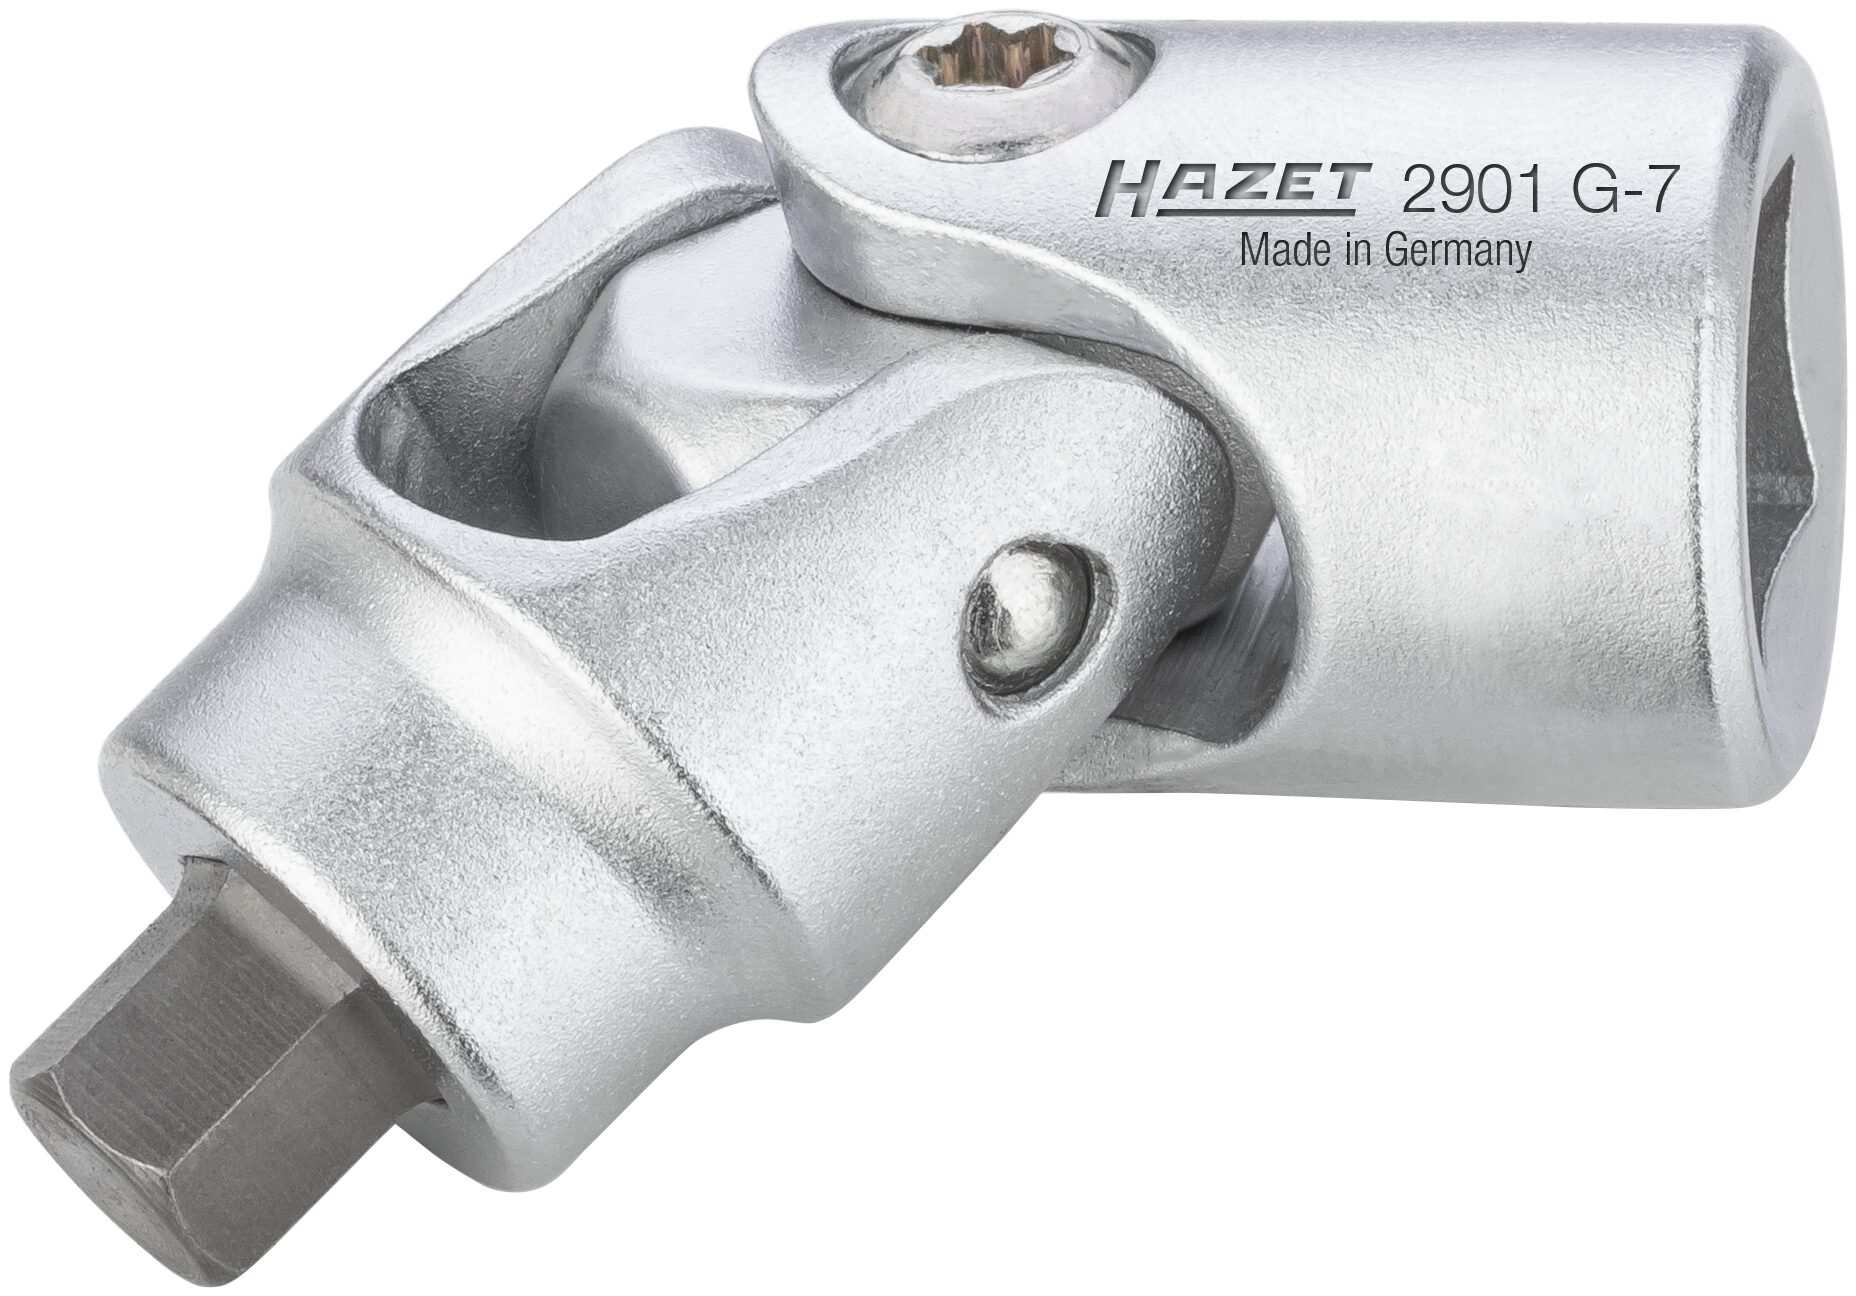 HAZET Bremssattel-Gelenkeinsatz 2901G-7 · Vierkant hohl 10 mm (3/8 Zoll) · Innen Sechskant Profil · 7 mm